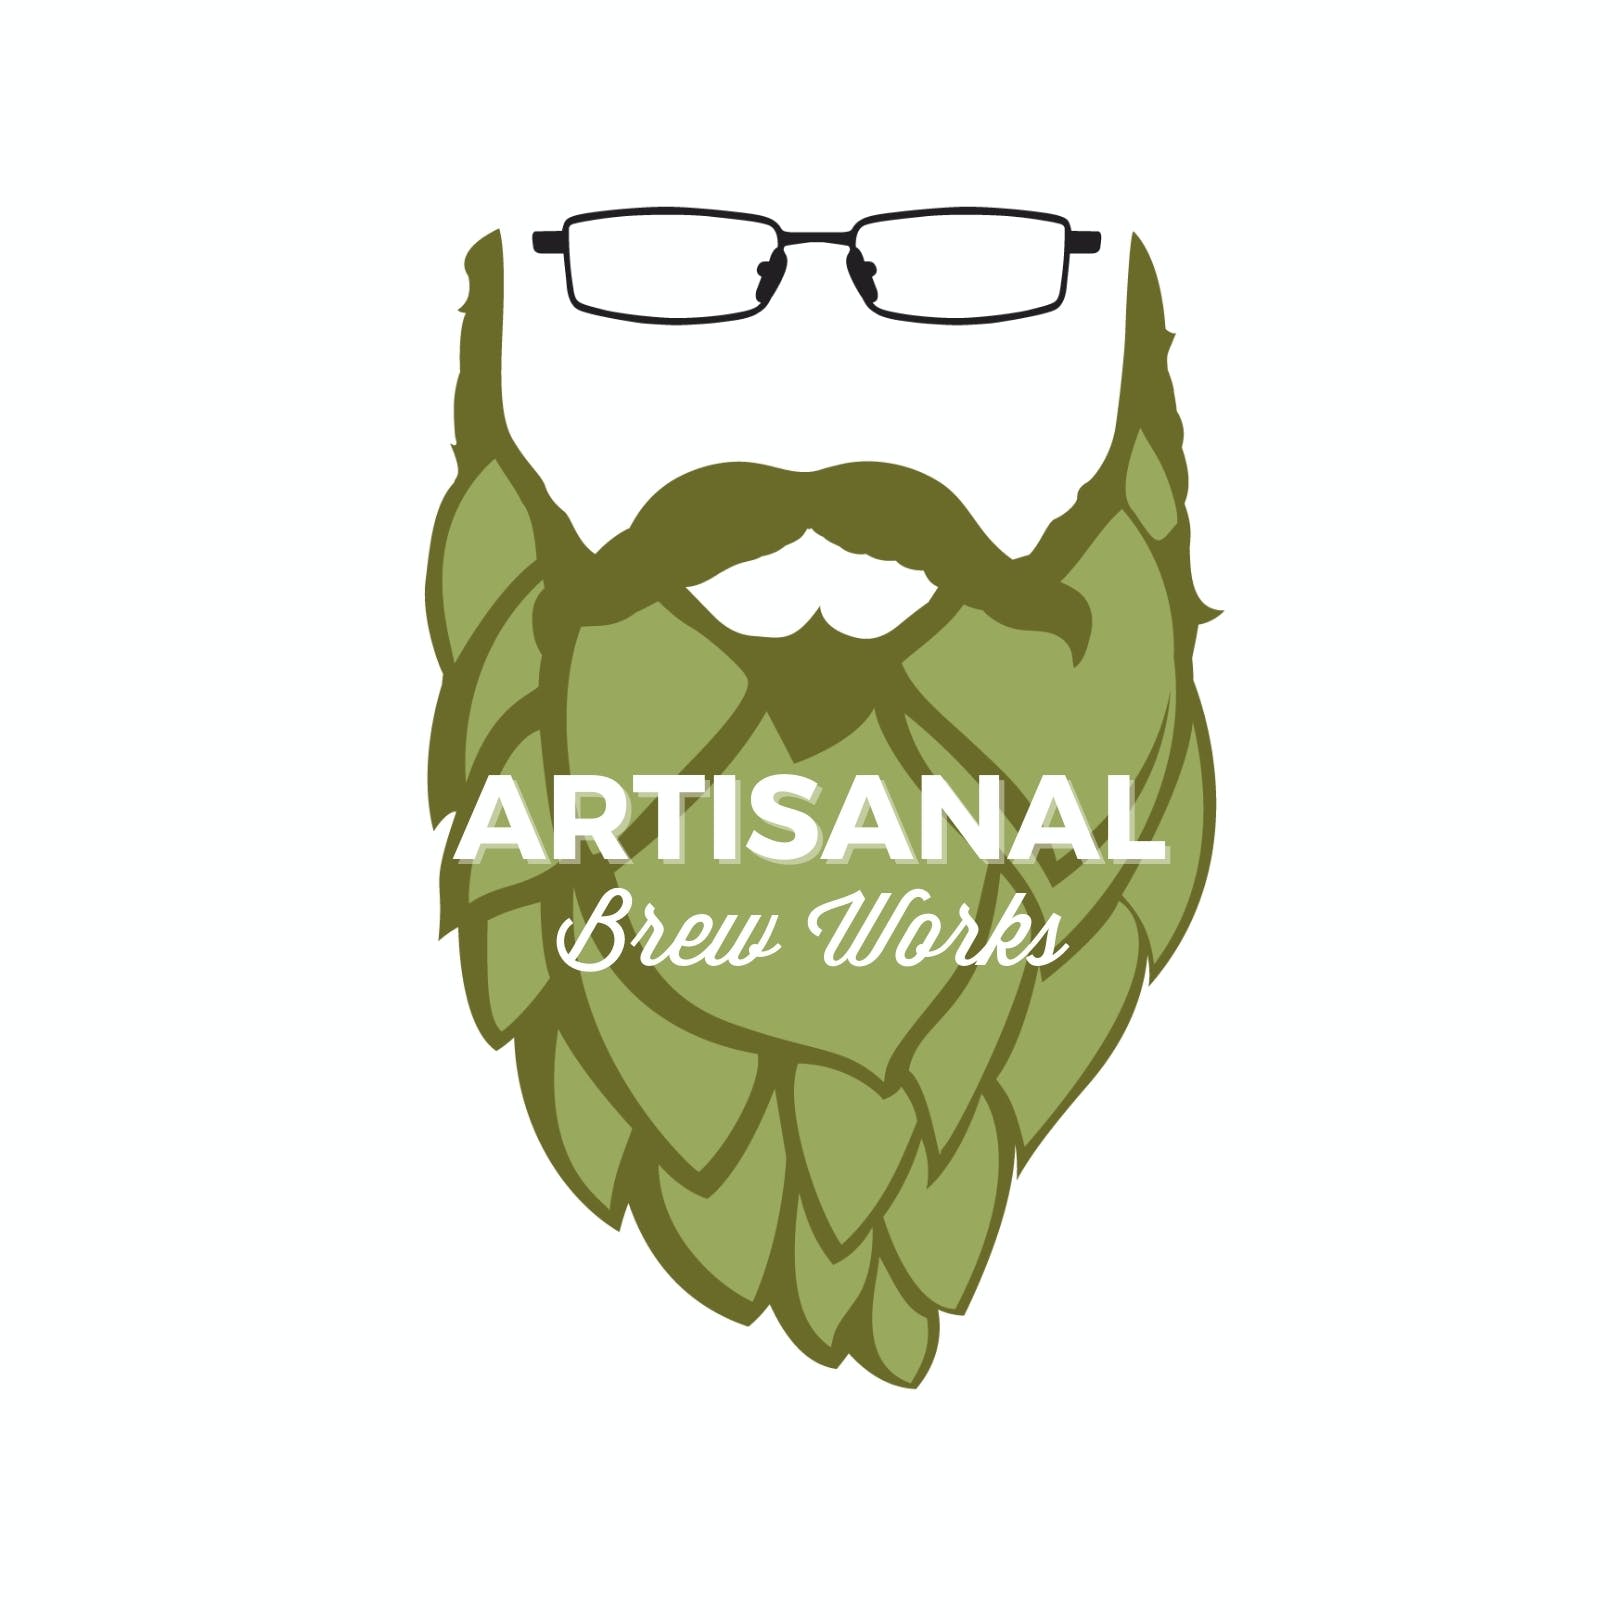 Artisanal Brewery Logo.jpeg